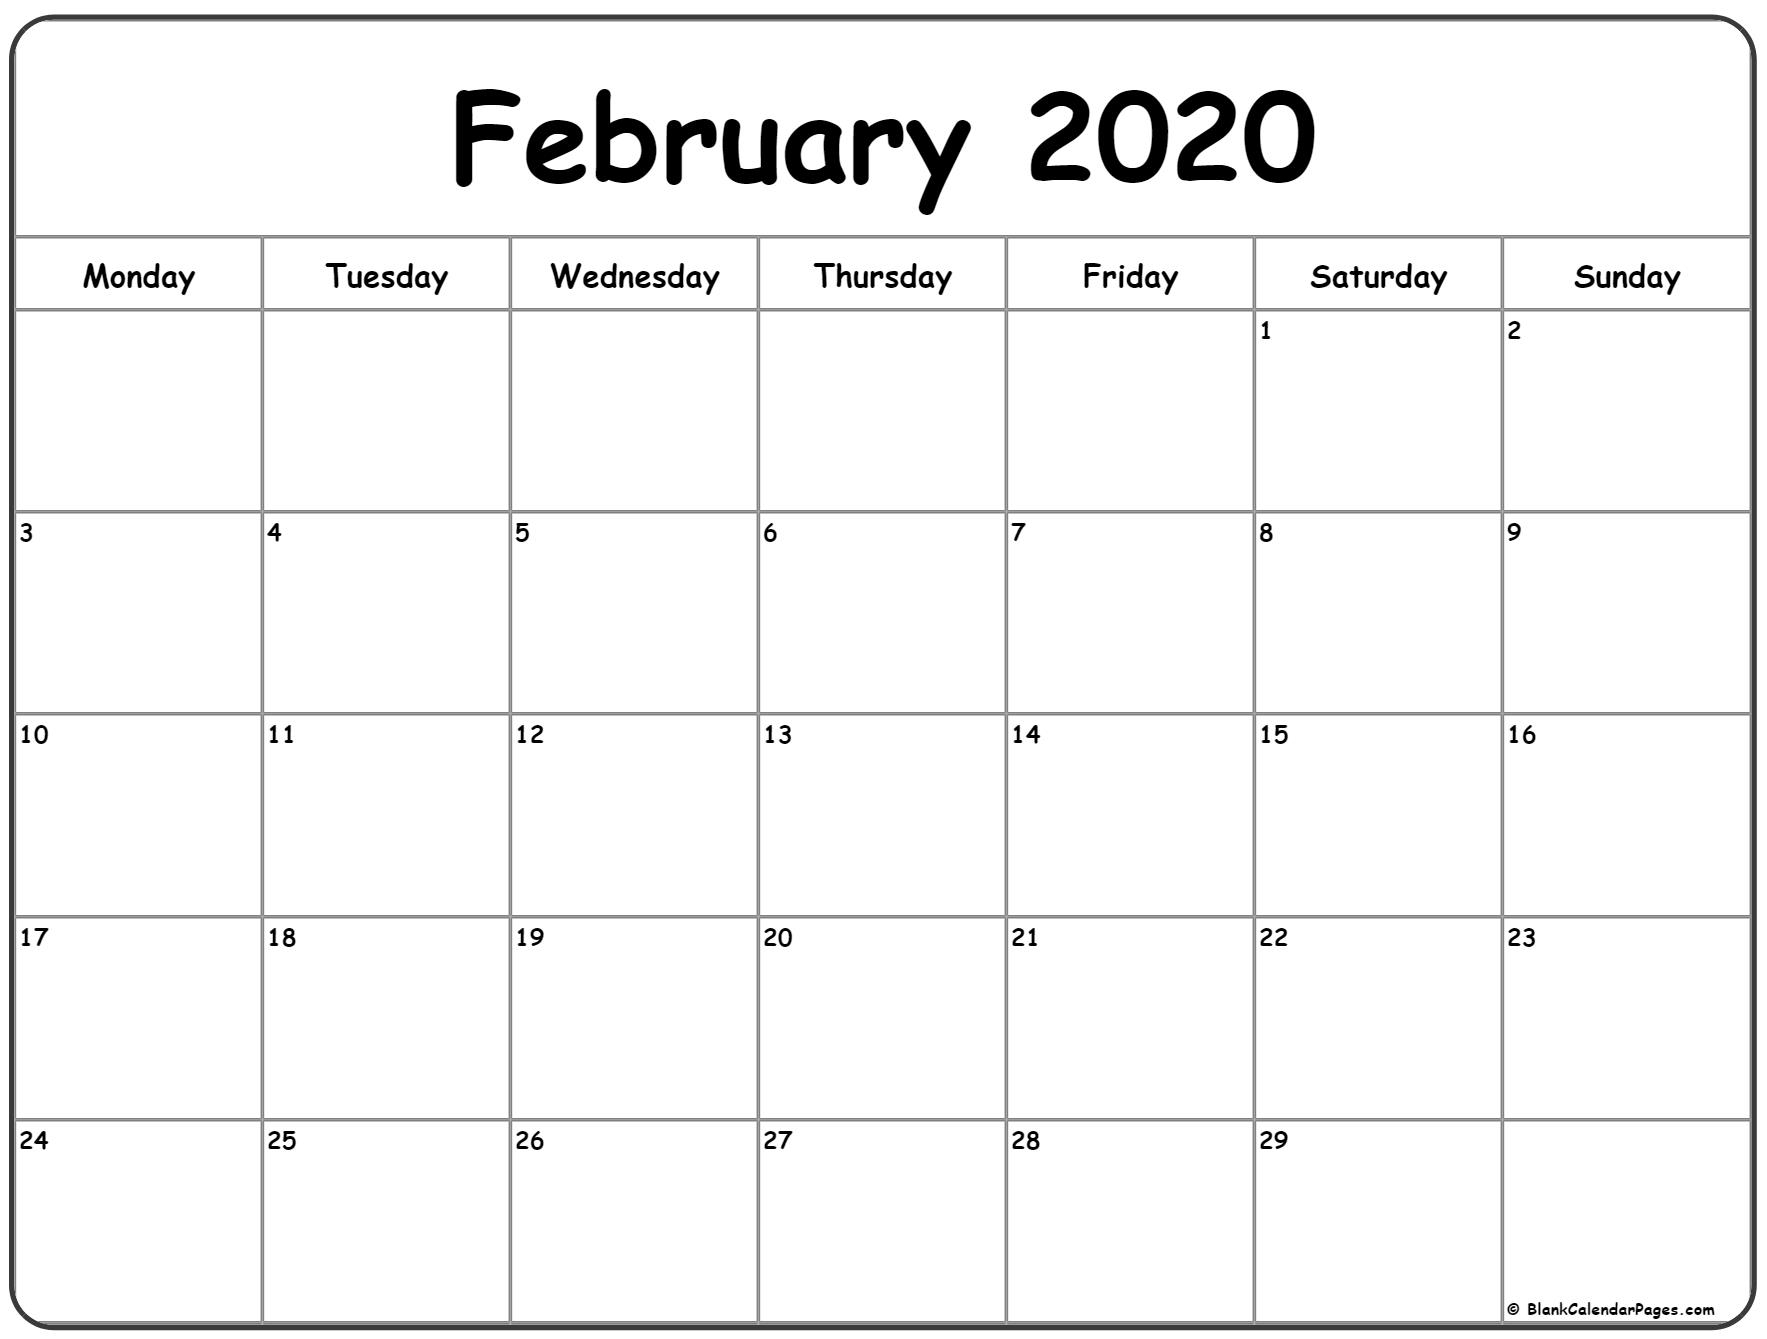 February 2020 Monday Calendar | Monday To Sunday inside Blank Calendar Monday Through Sunday